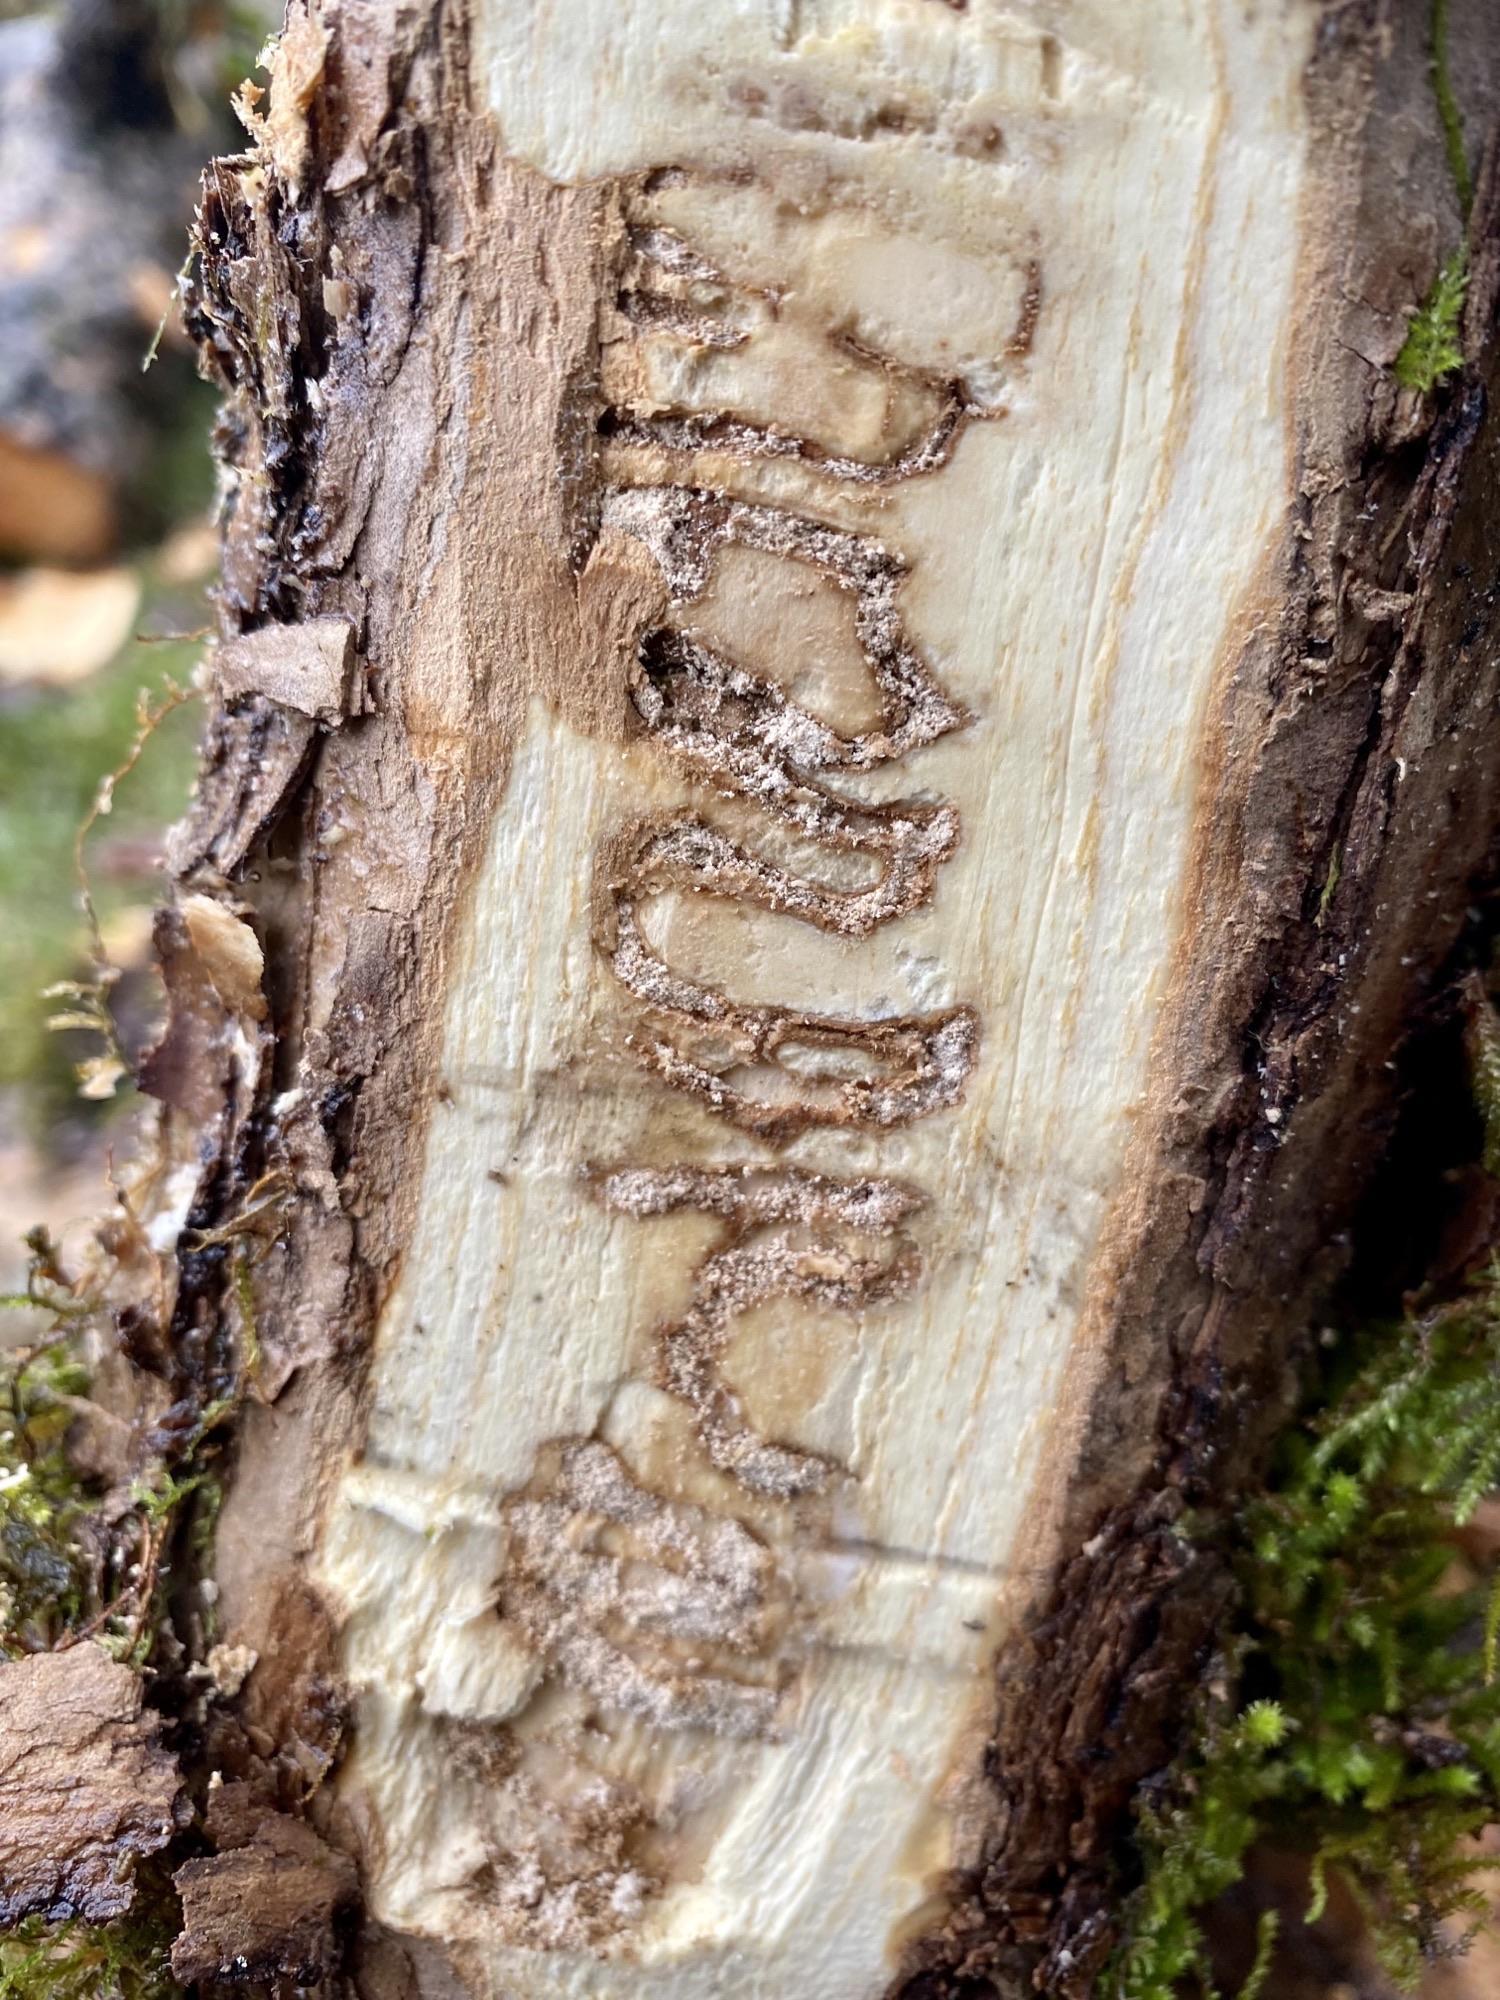 Emerald ash borer damage inside an ash tree